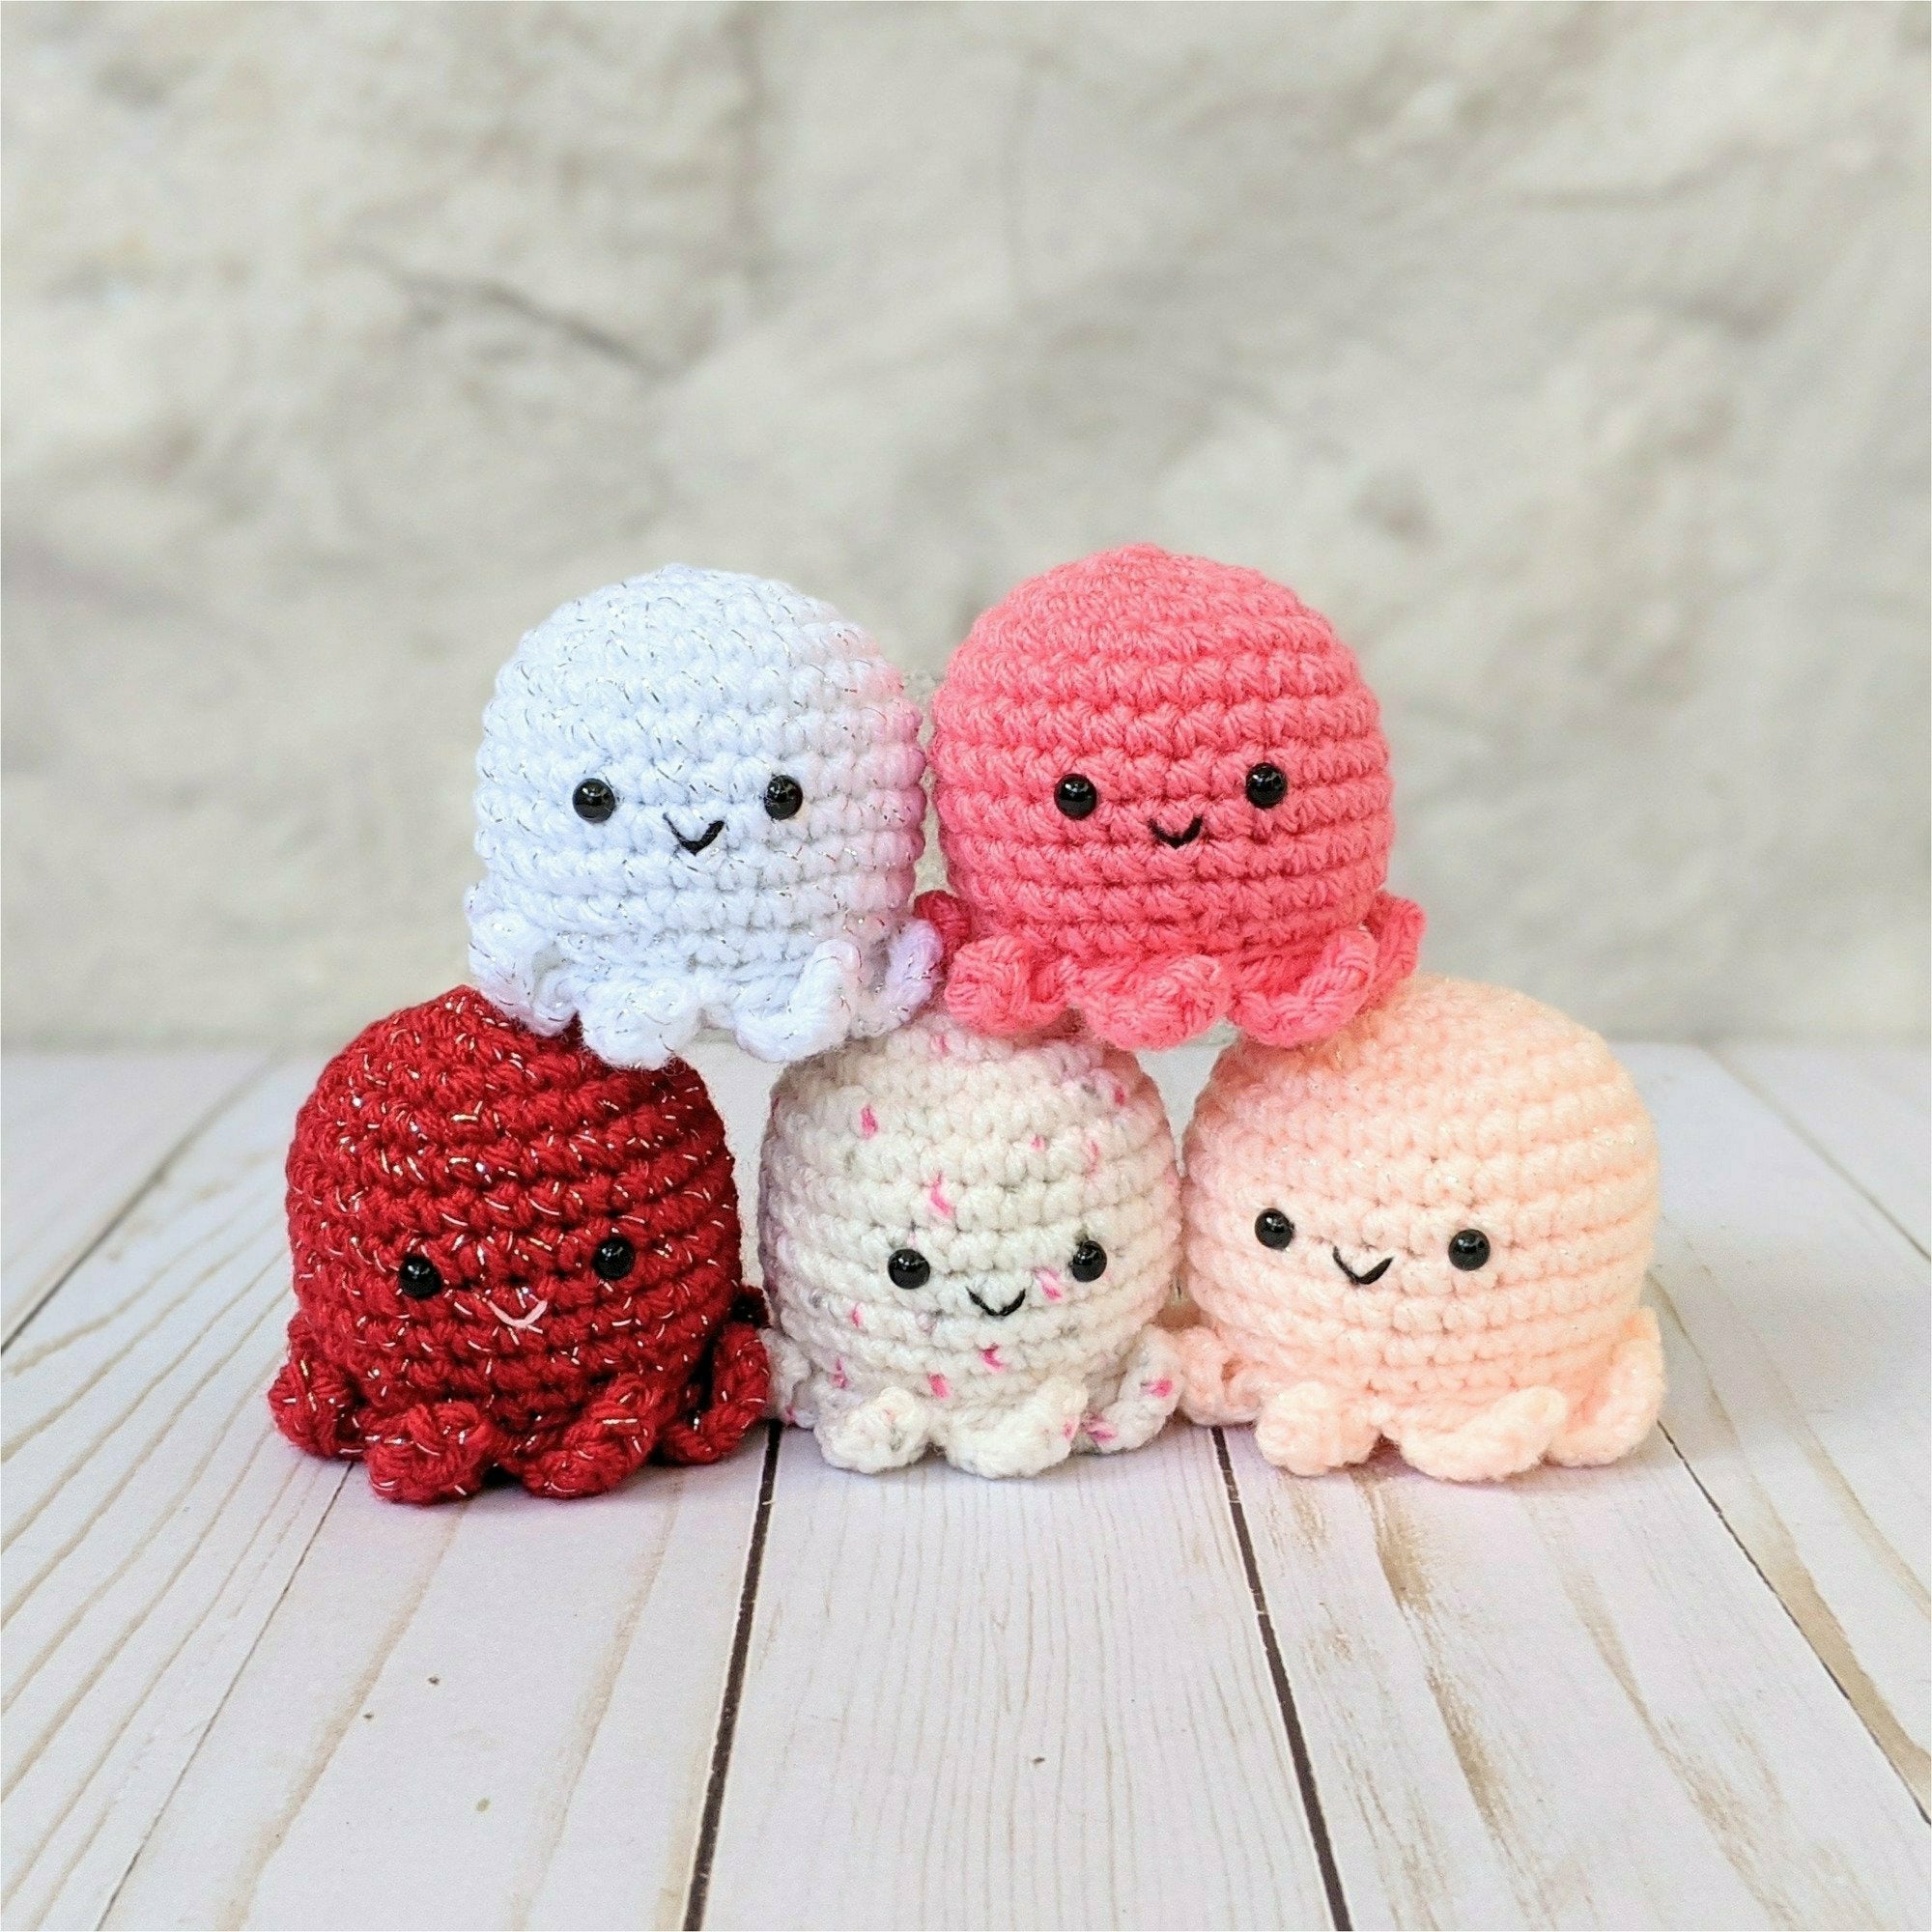 CROCHET PATTERN: Baby Octopus, Stuffed Amigurumi Plush Toy | BabyCa...